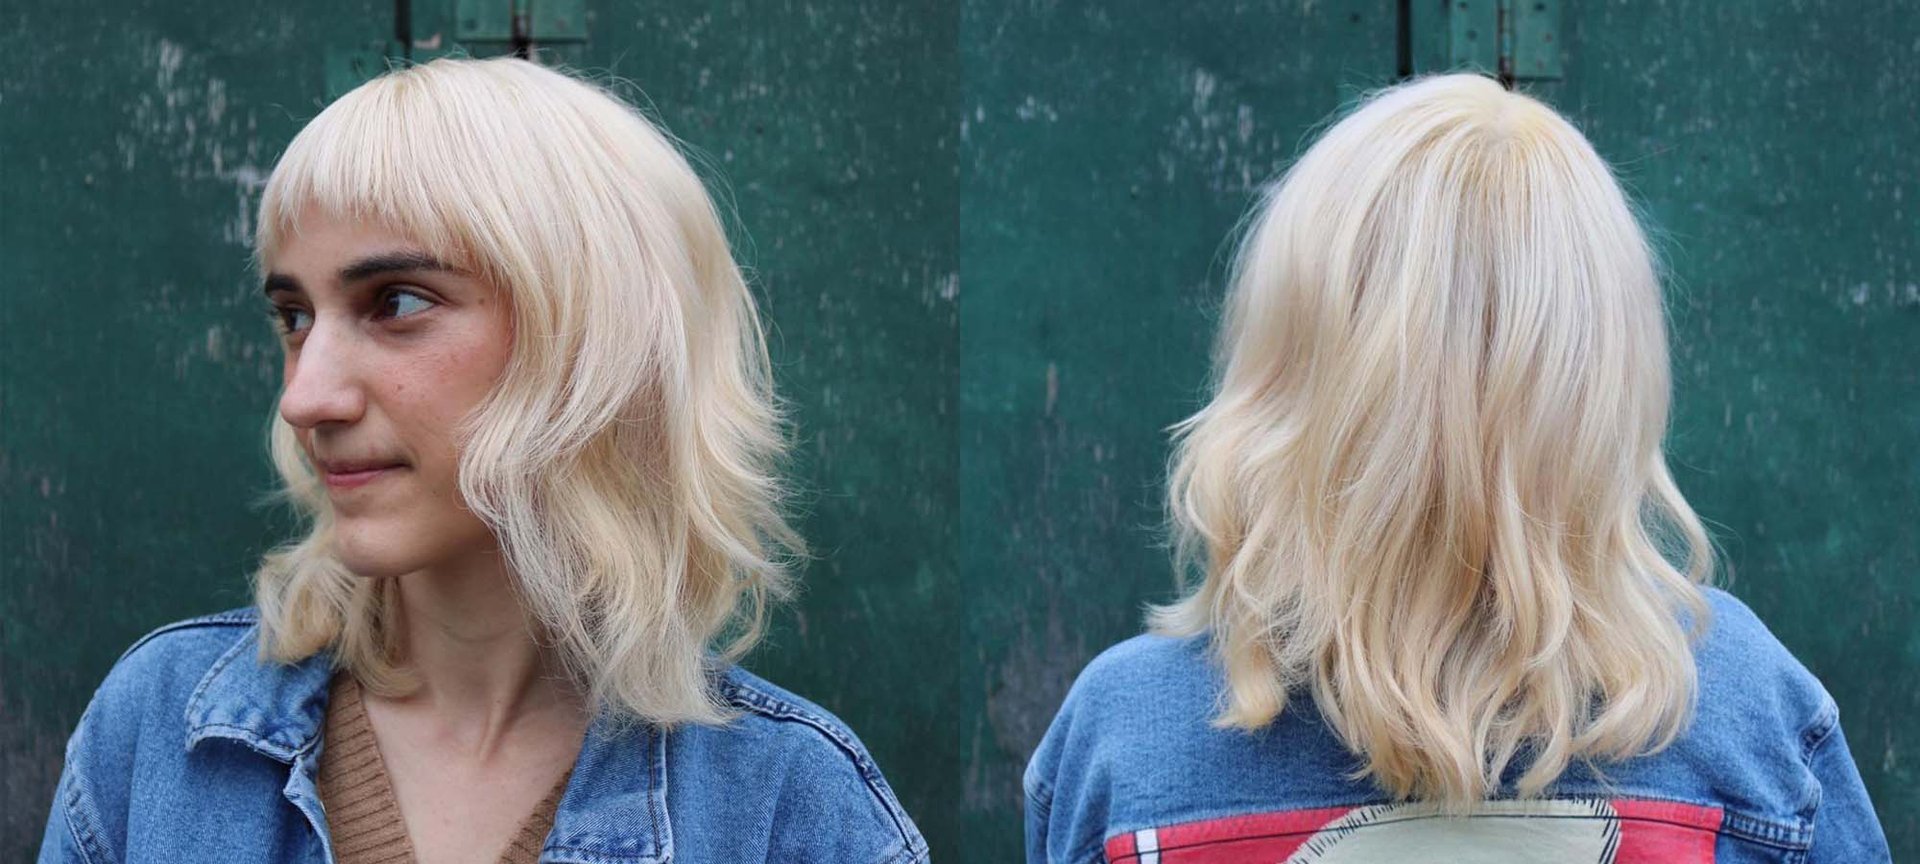 1. "How to Achieve Baby Blonde Highlights on Dark Hair" - wide 2